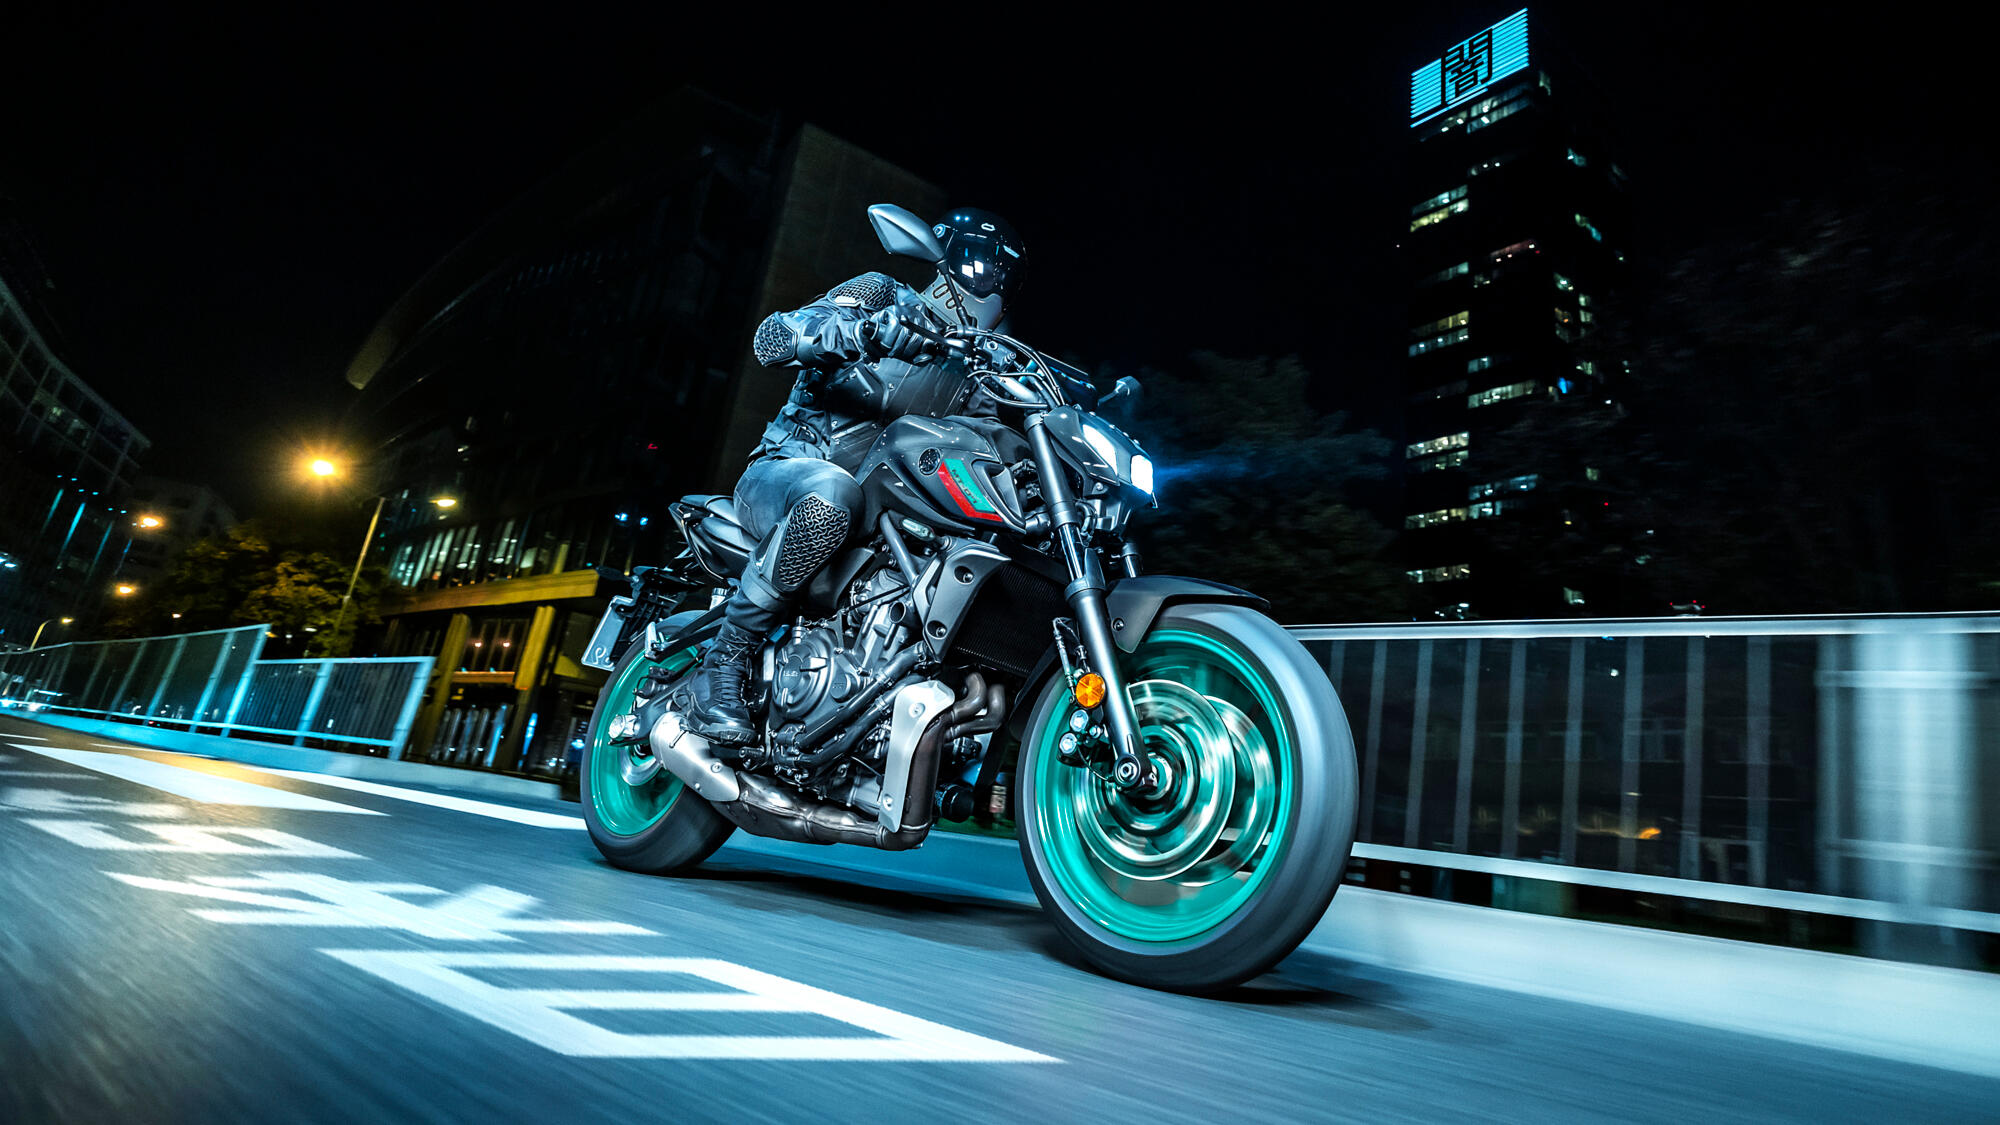 MT-07 - Motorcycles - Yamaha Motor